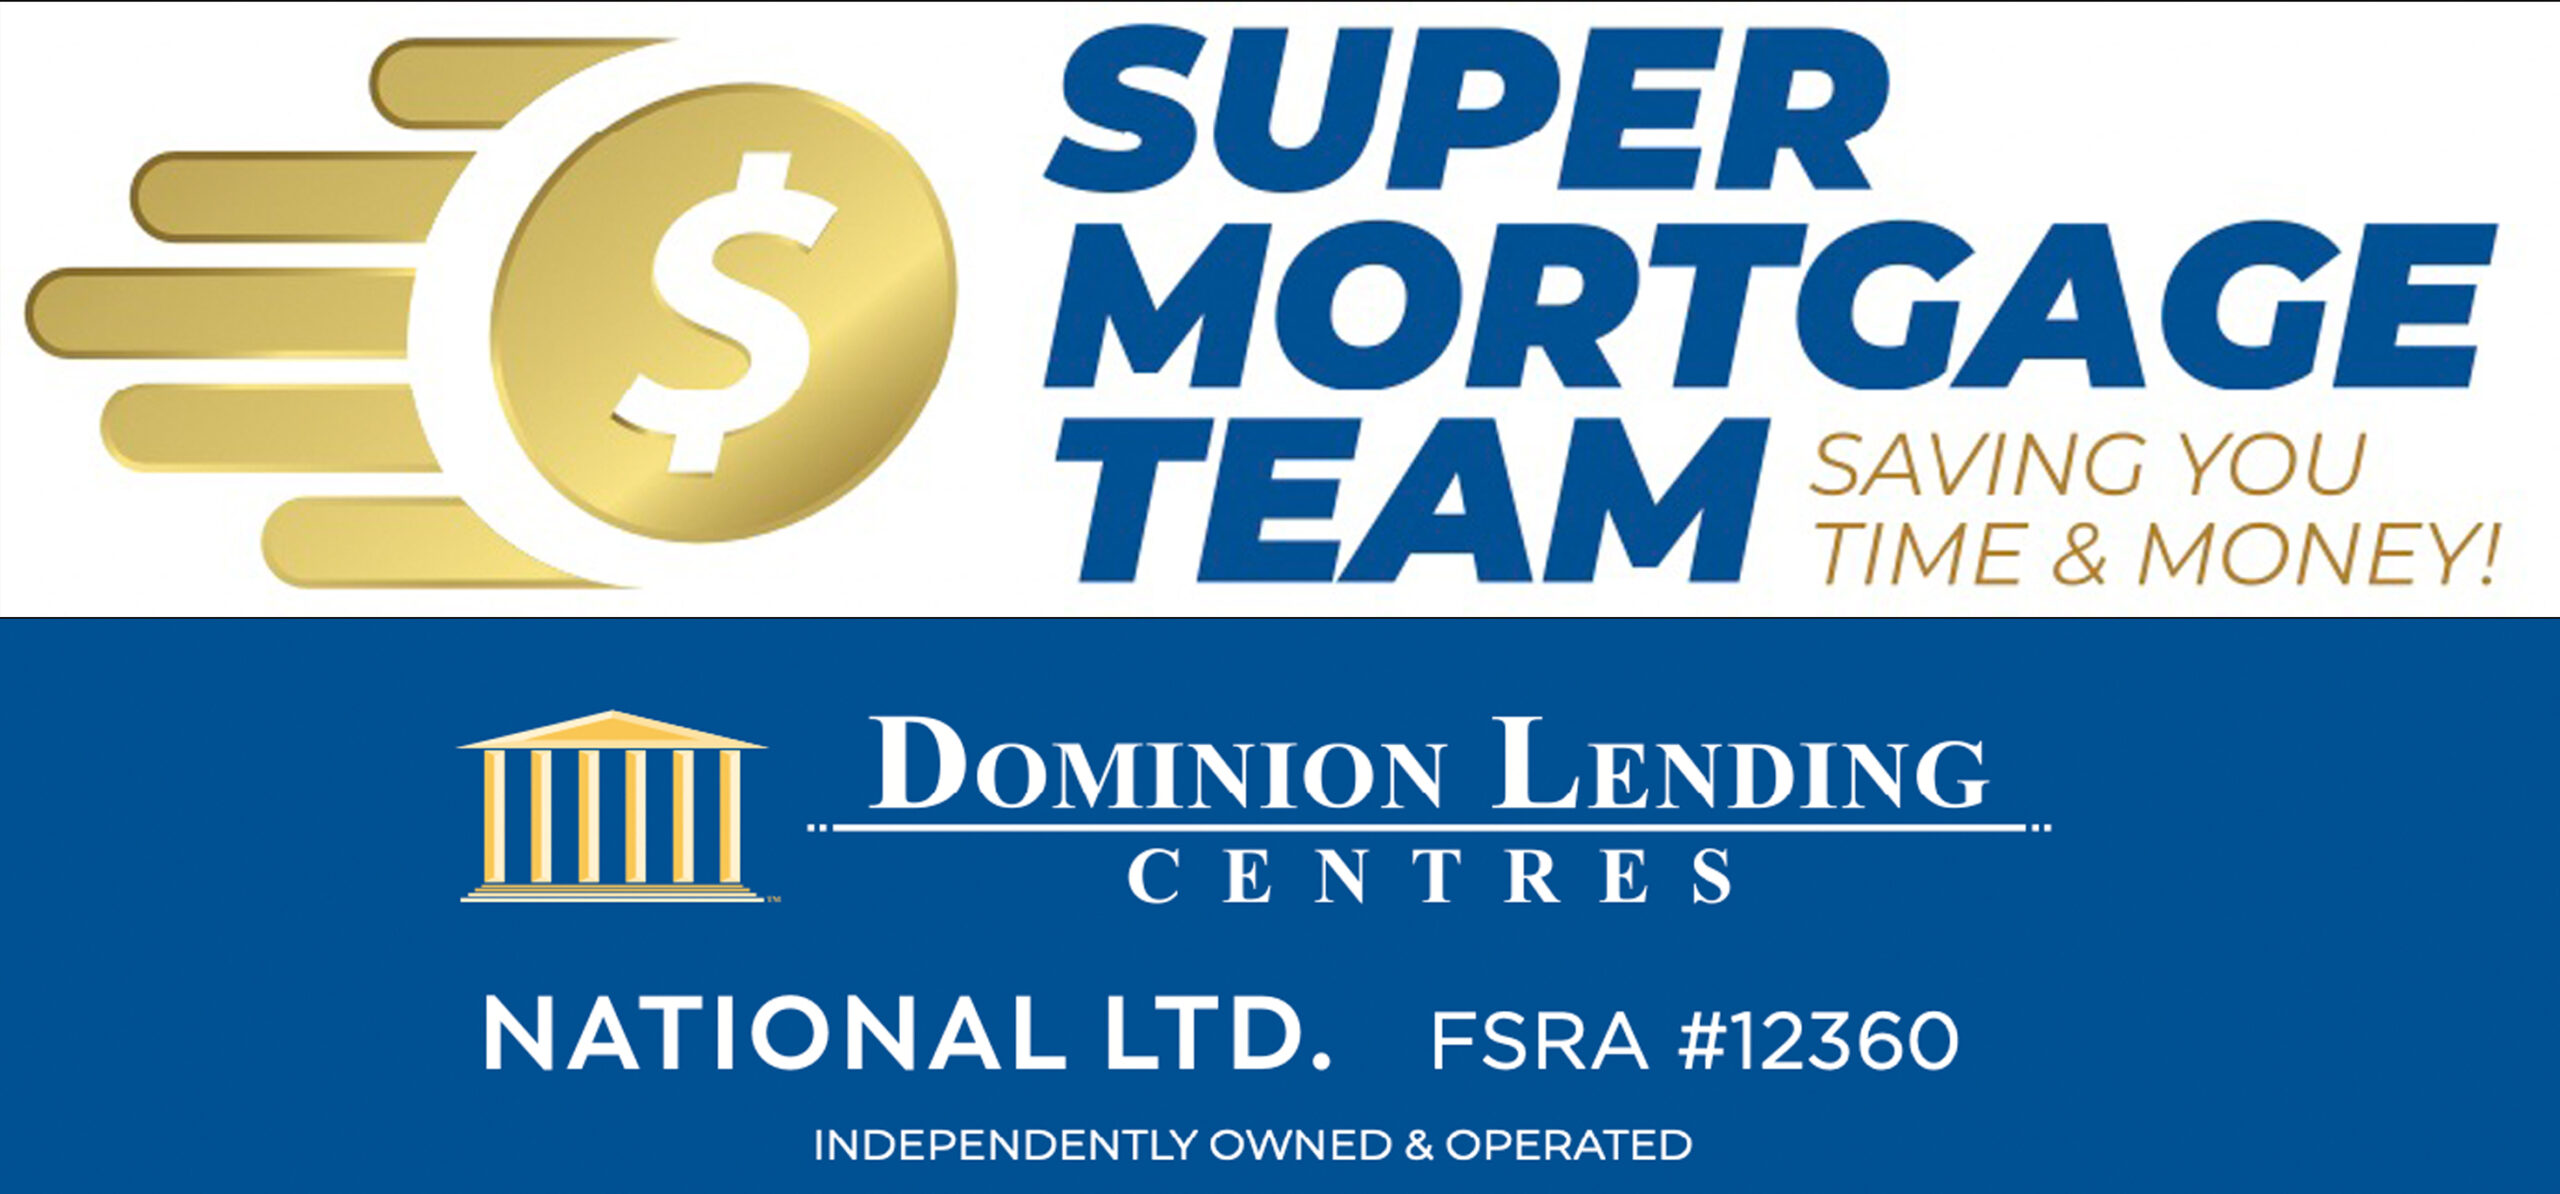 Dominion Lending Centers – Super Mortgage Team